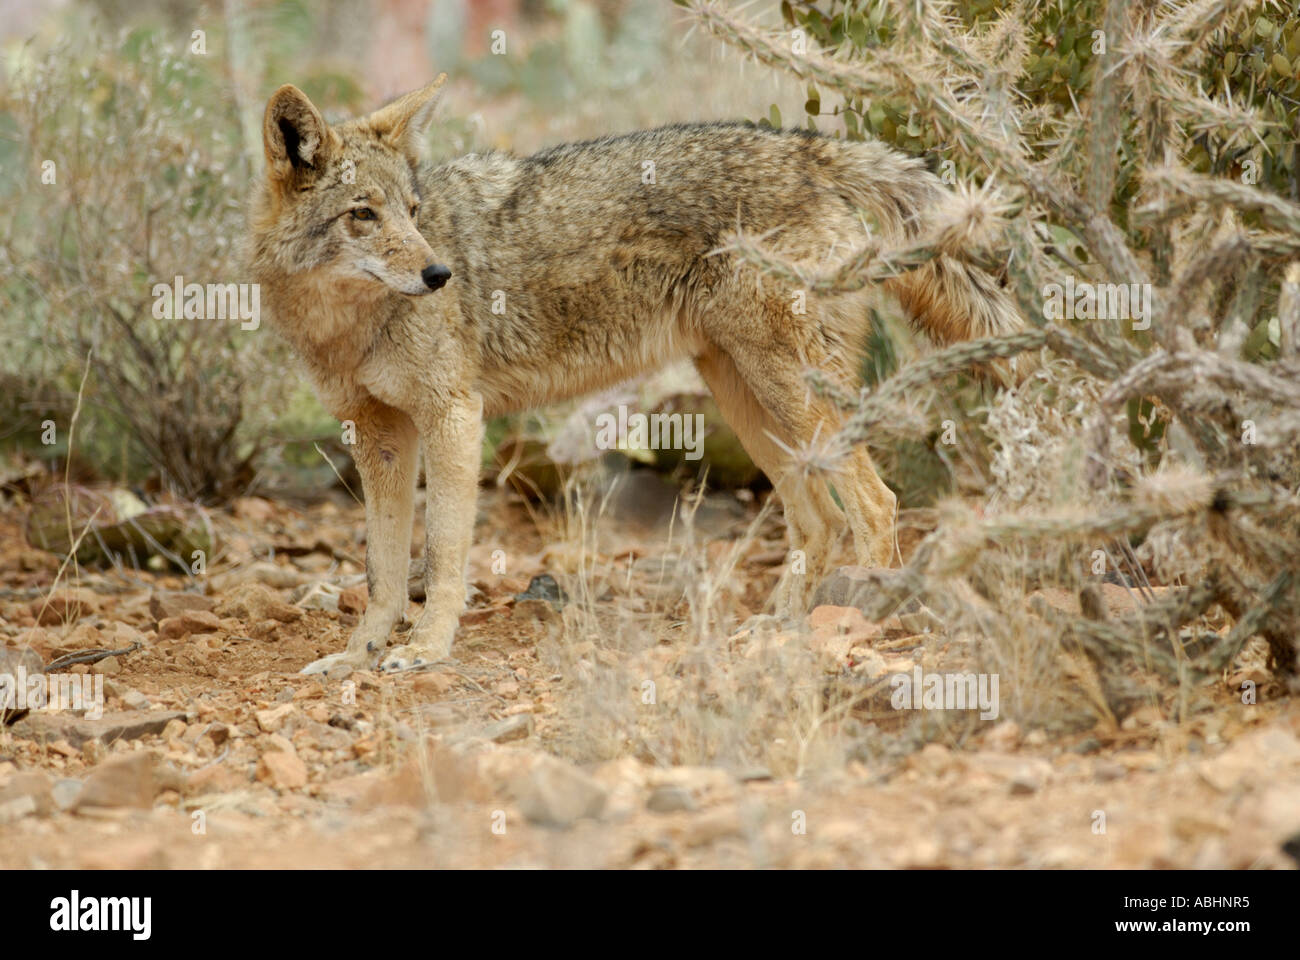 Coyote, Canis latrans, in desert habitat Stock Photo